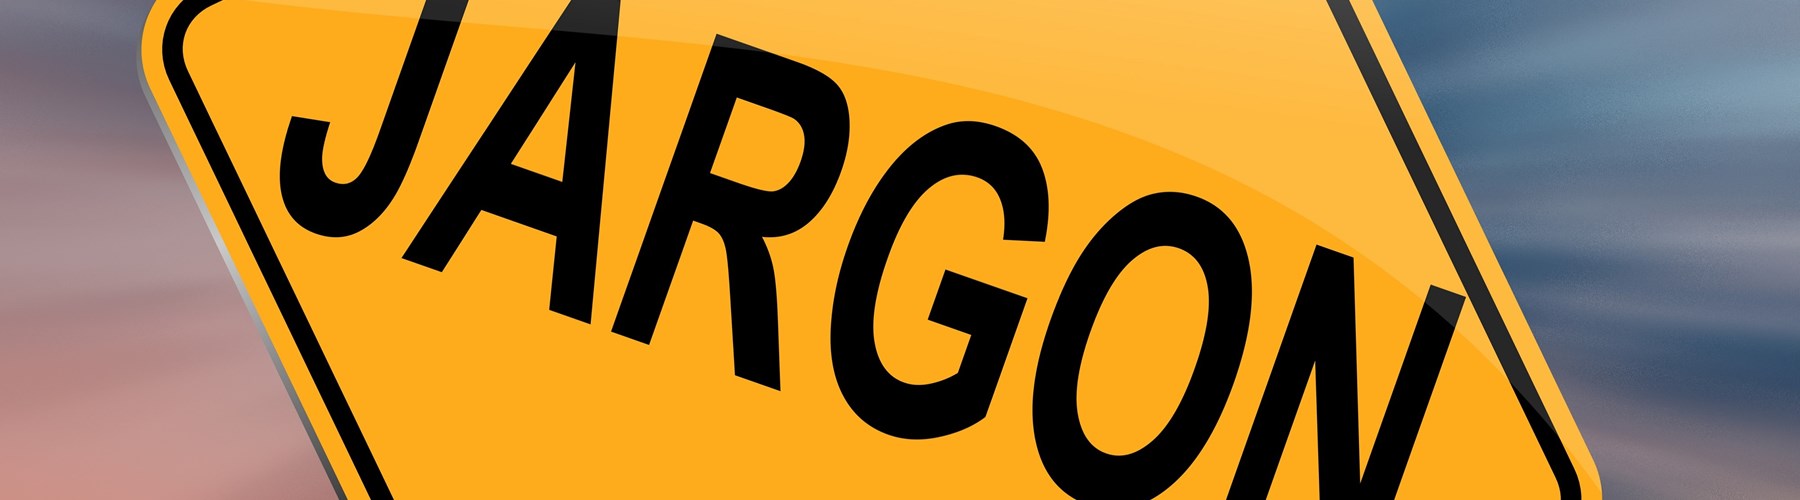 Yellow jargon traffic sign